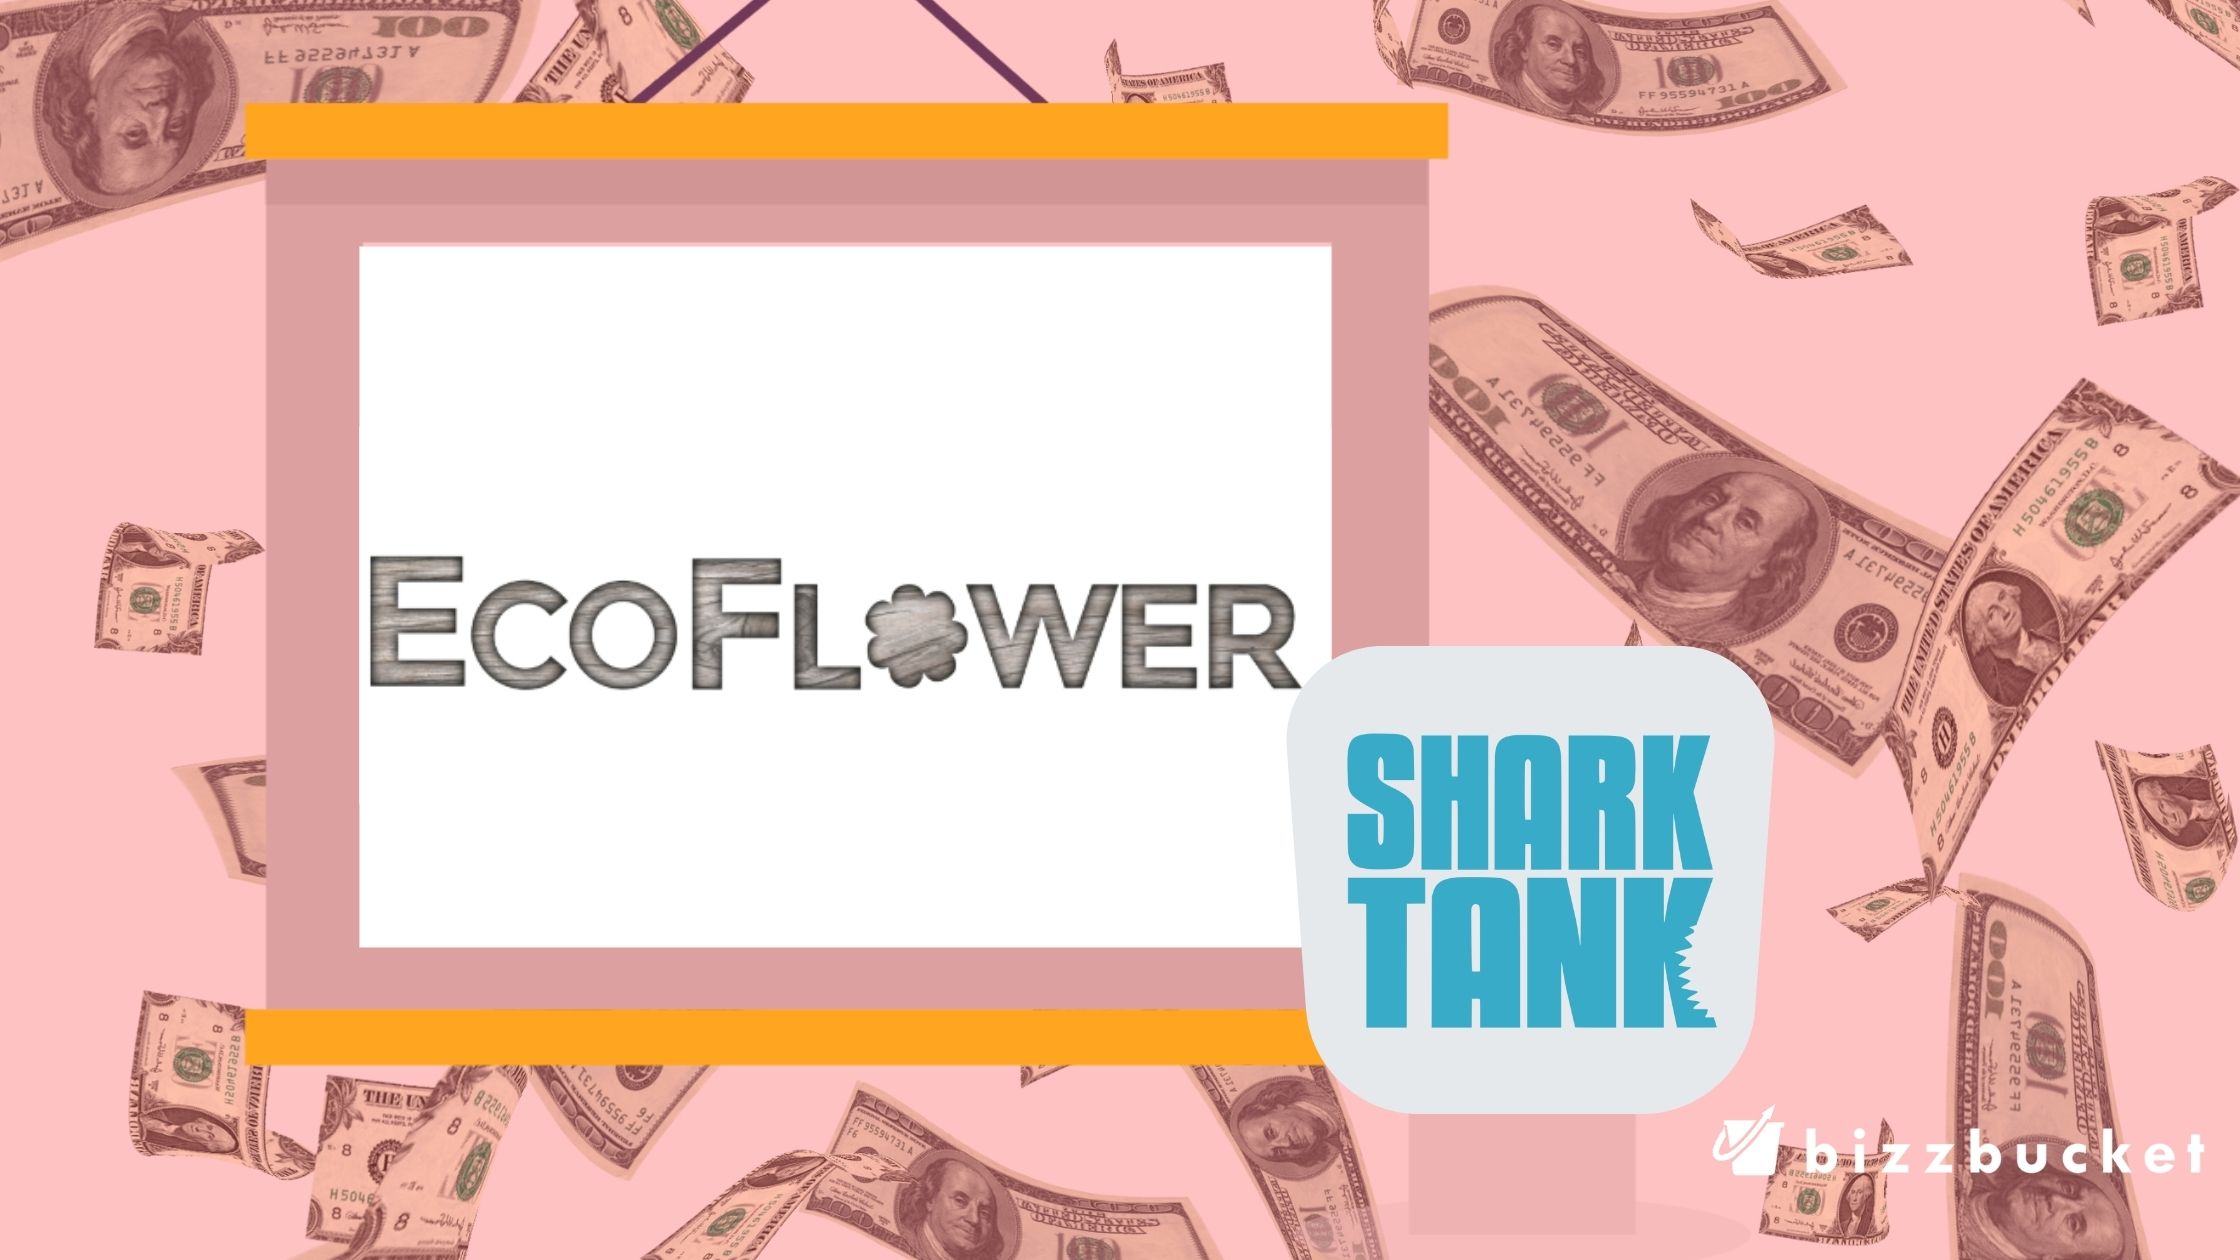 Eco Flowers shark tank update